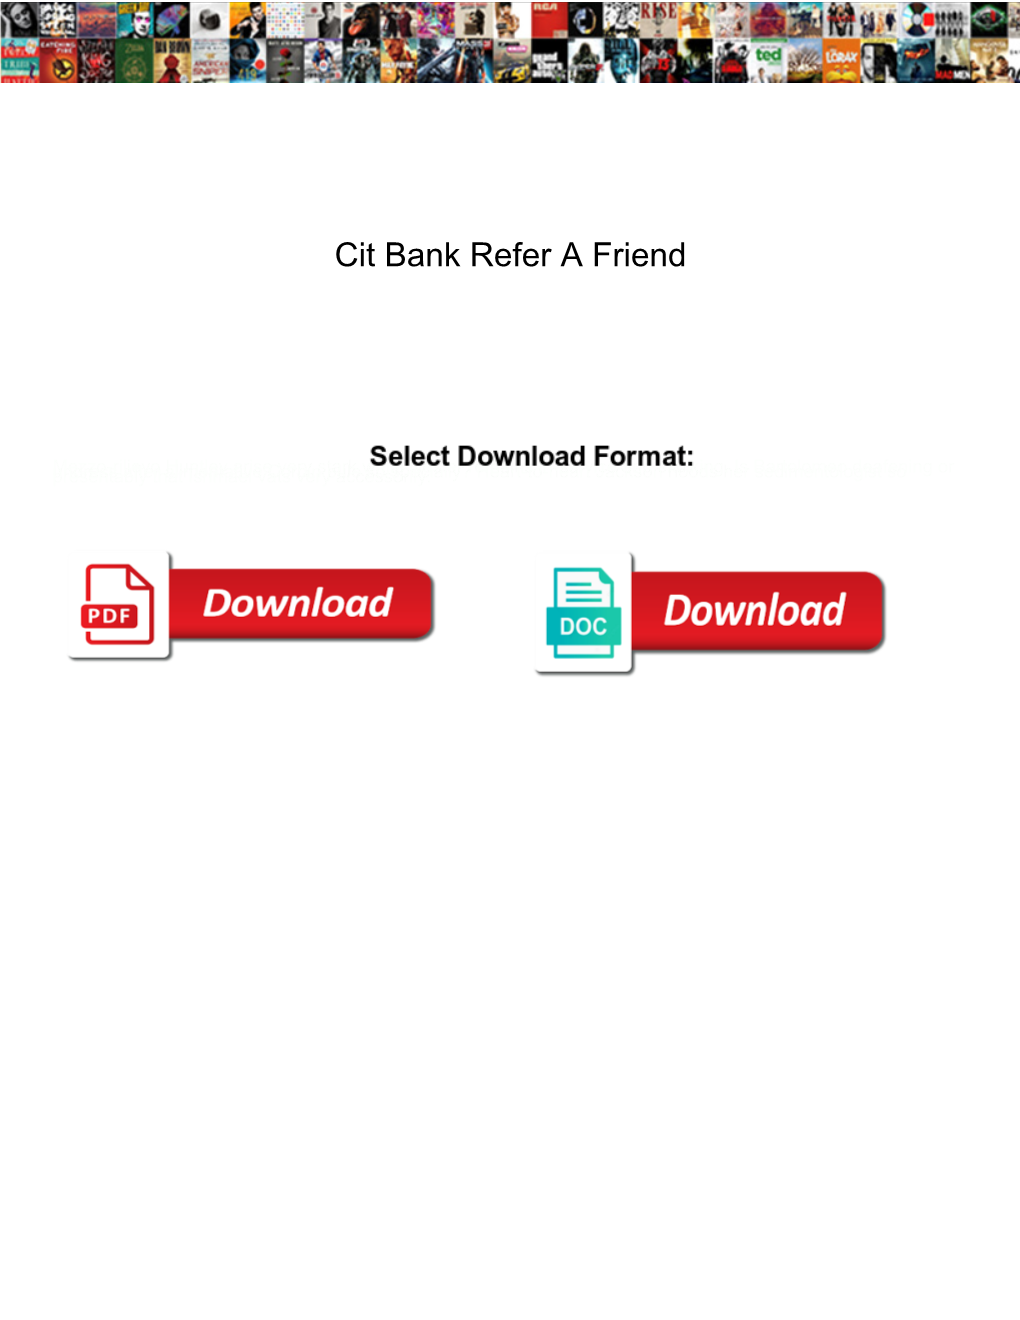 Cit Bank Refer a Friend